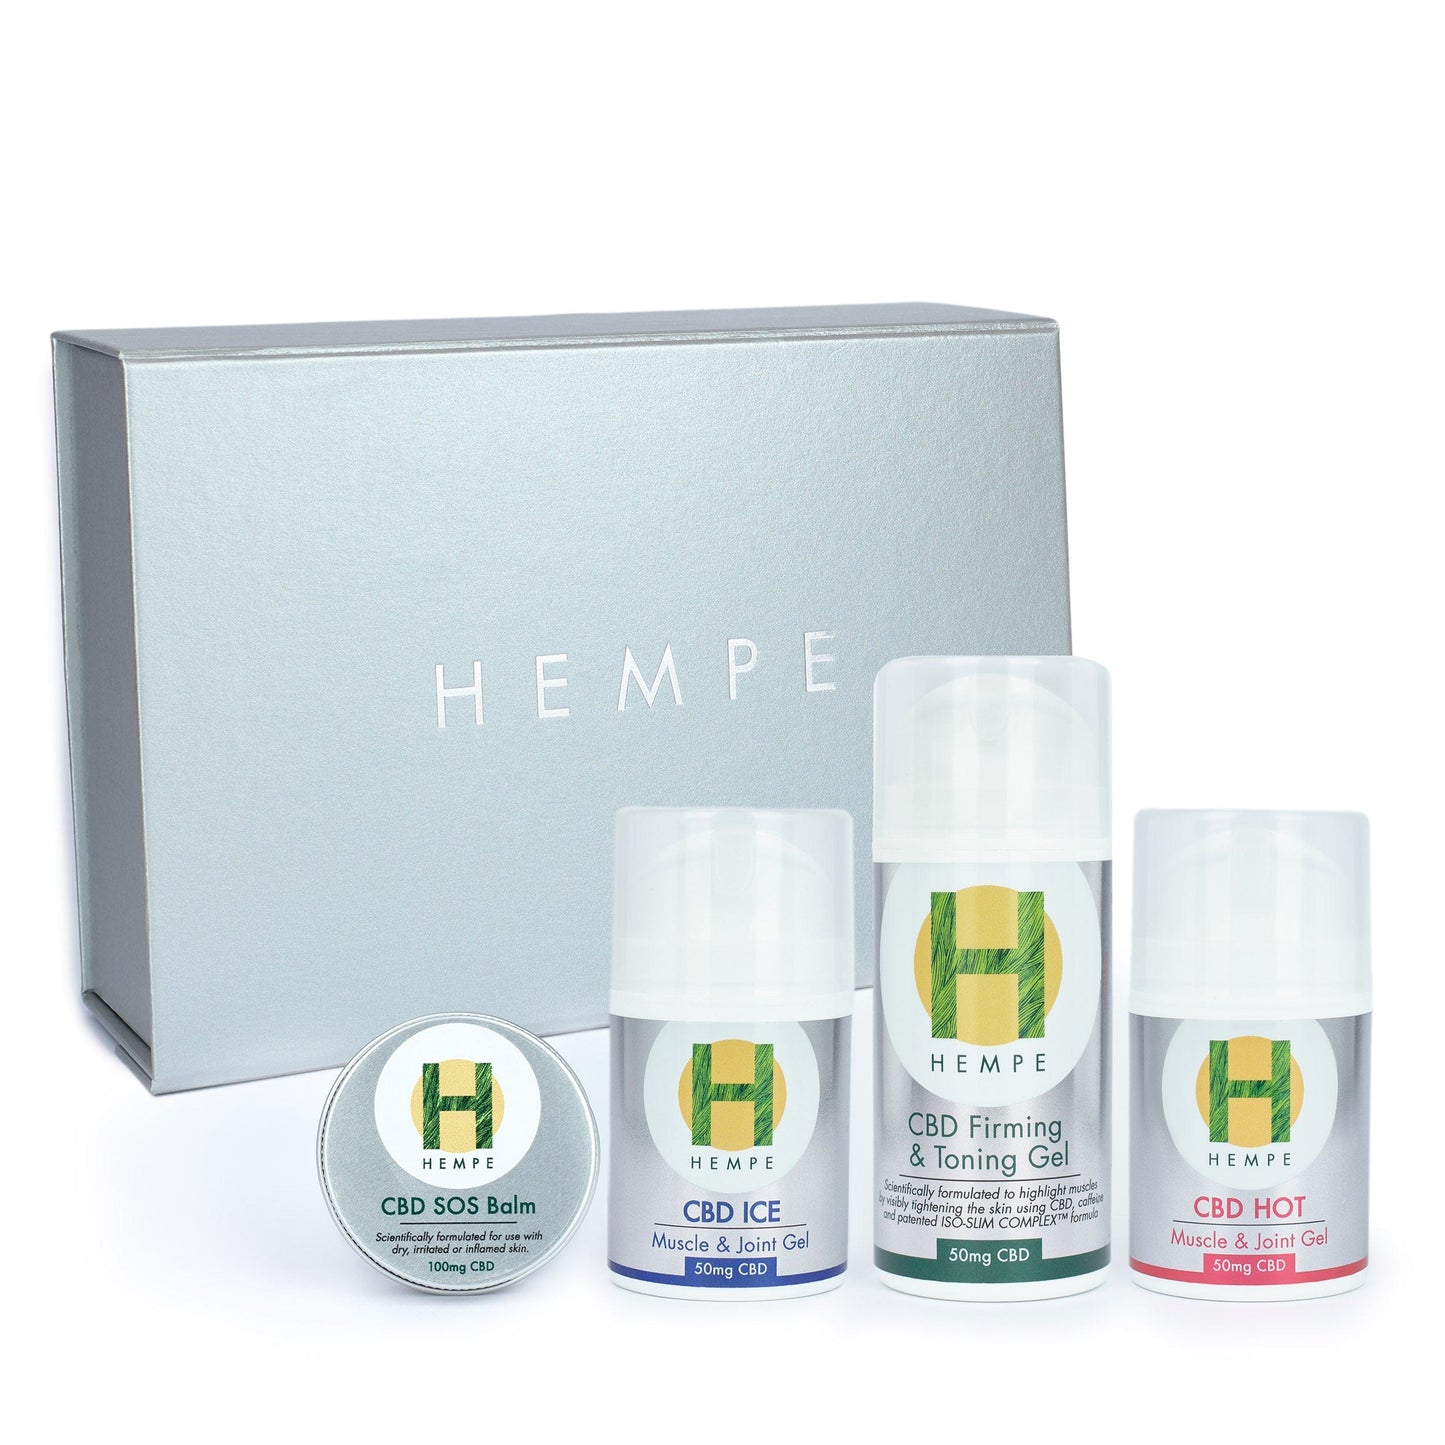 Hempe HEMPE Range Gift Box Set ....save 10%!